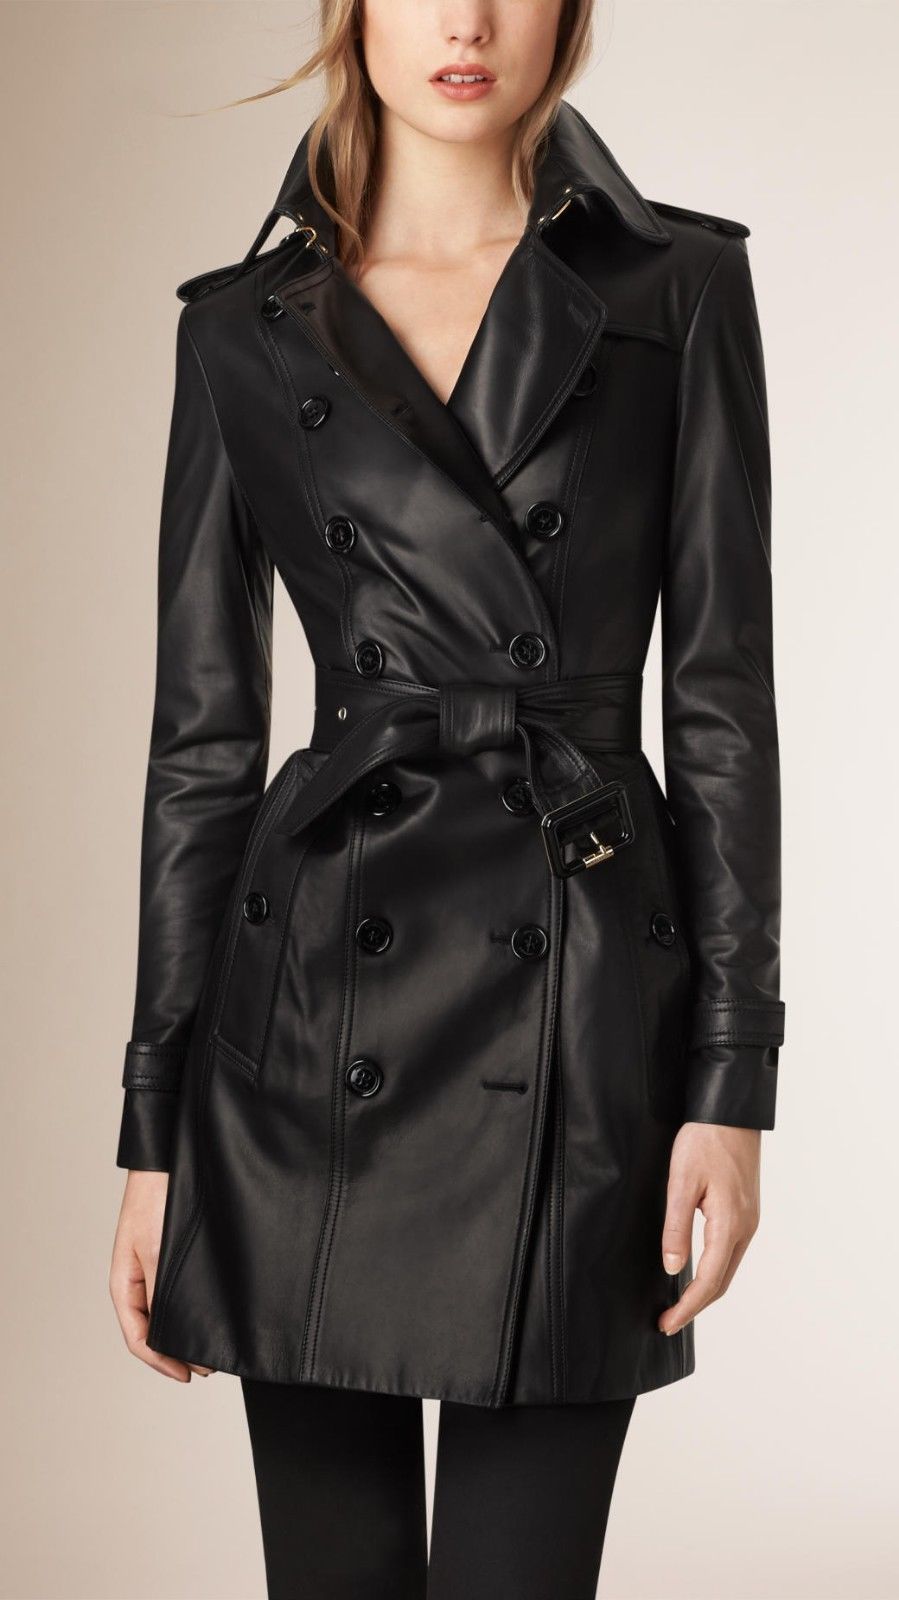 Women Black Leather Trench Coat Pure Lambskin Size Xs S M L Xl Xxl Custom Made Coats Jackets